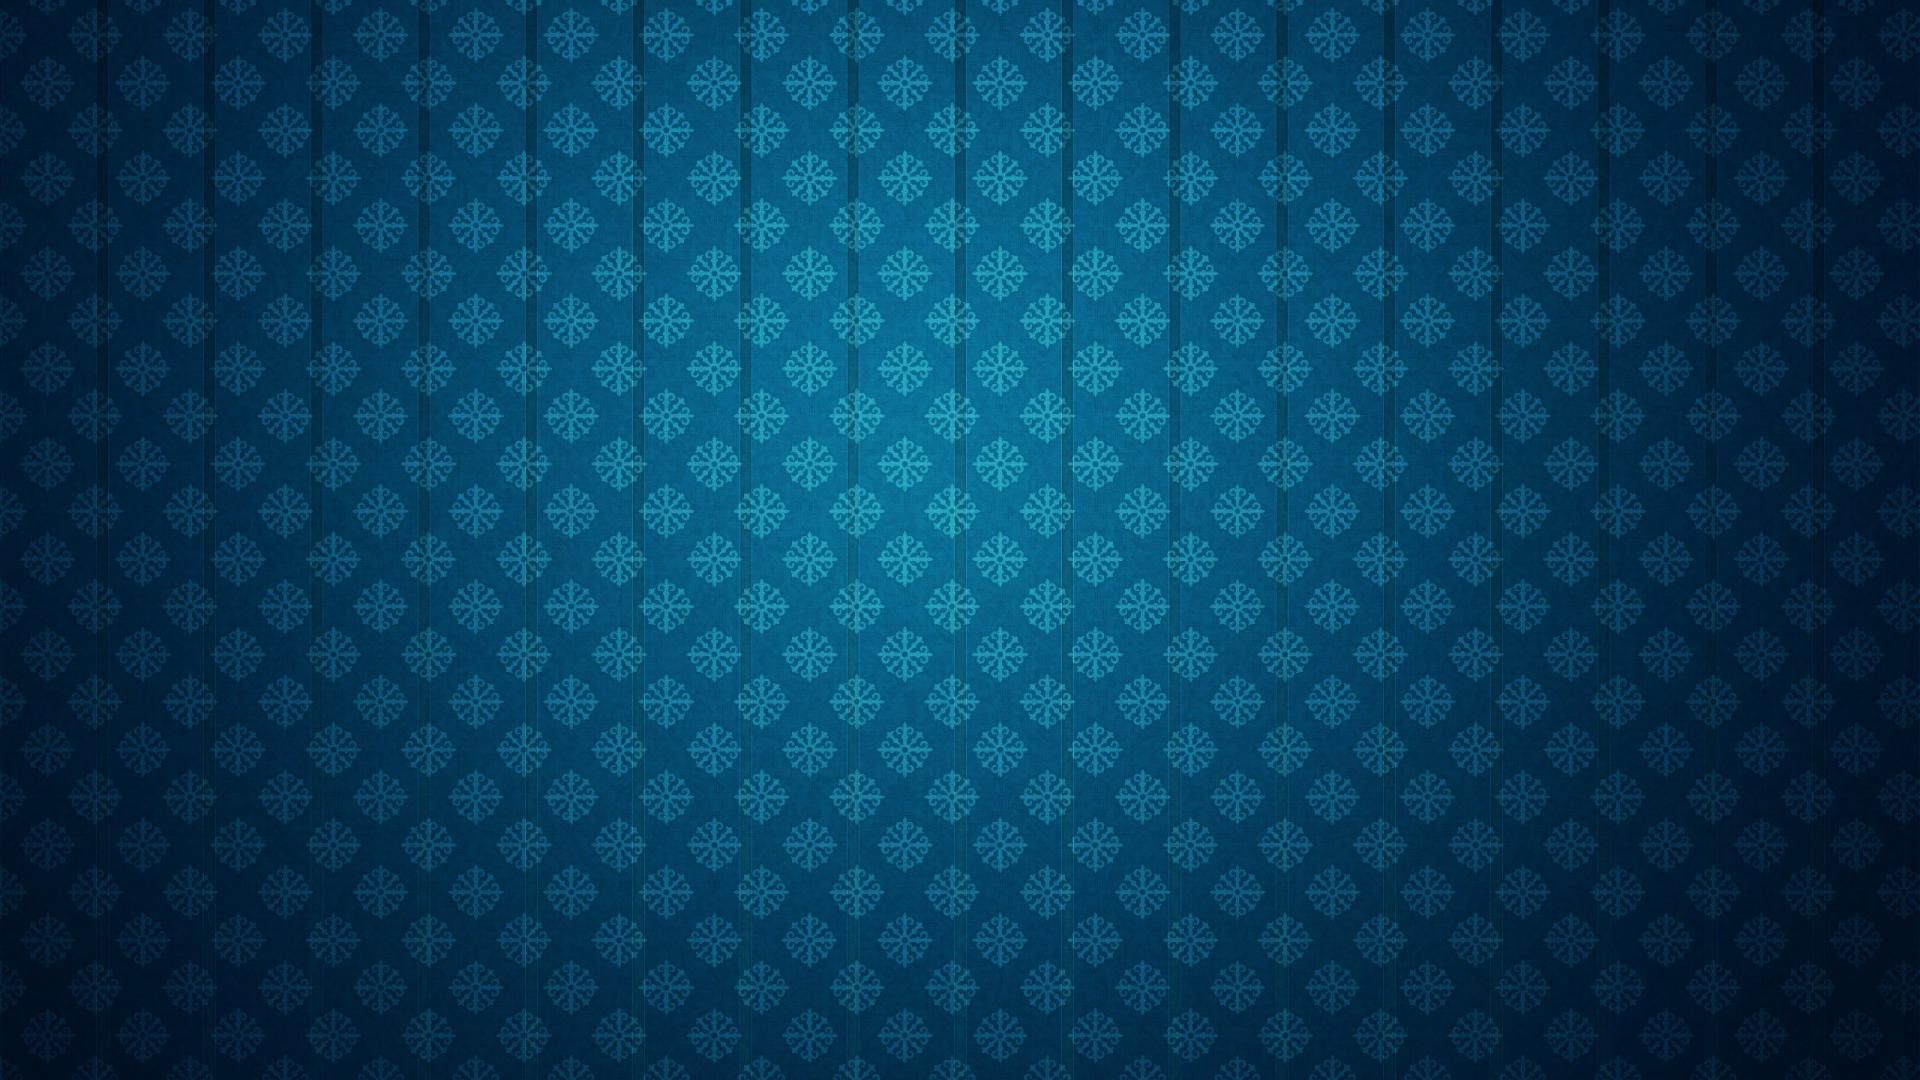 Background Design 023jpg 19201080 Blue background patterns